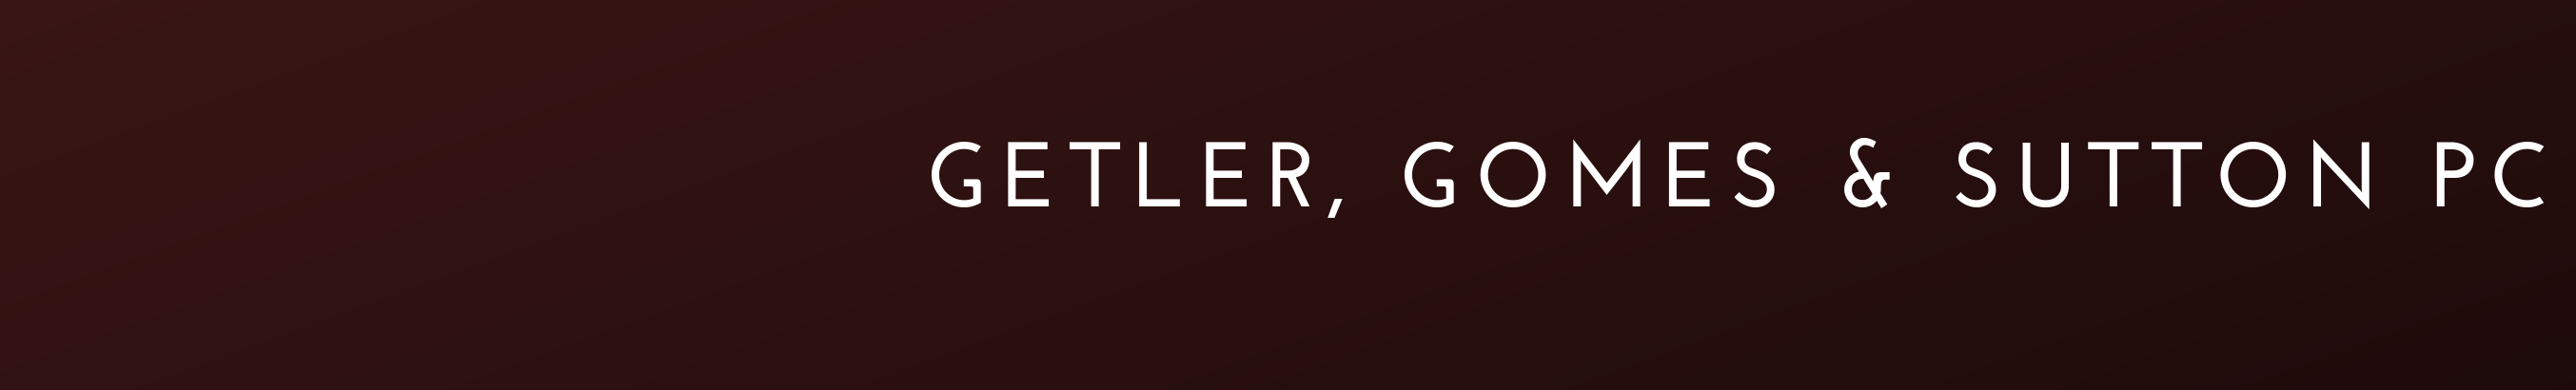 Getler, Gomes & Sutton PC's profile banner